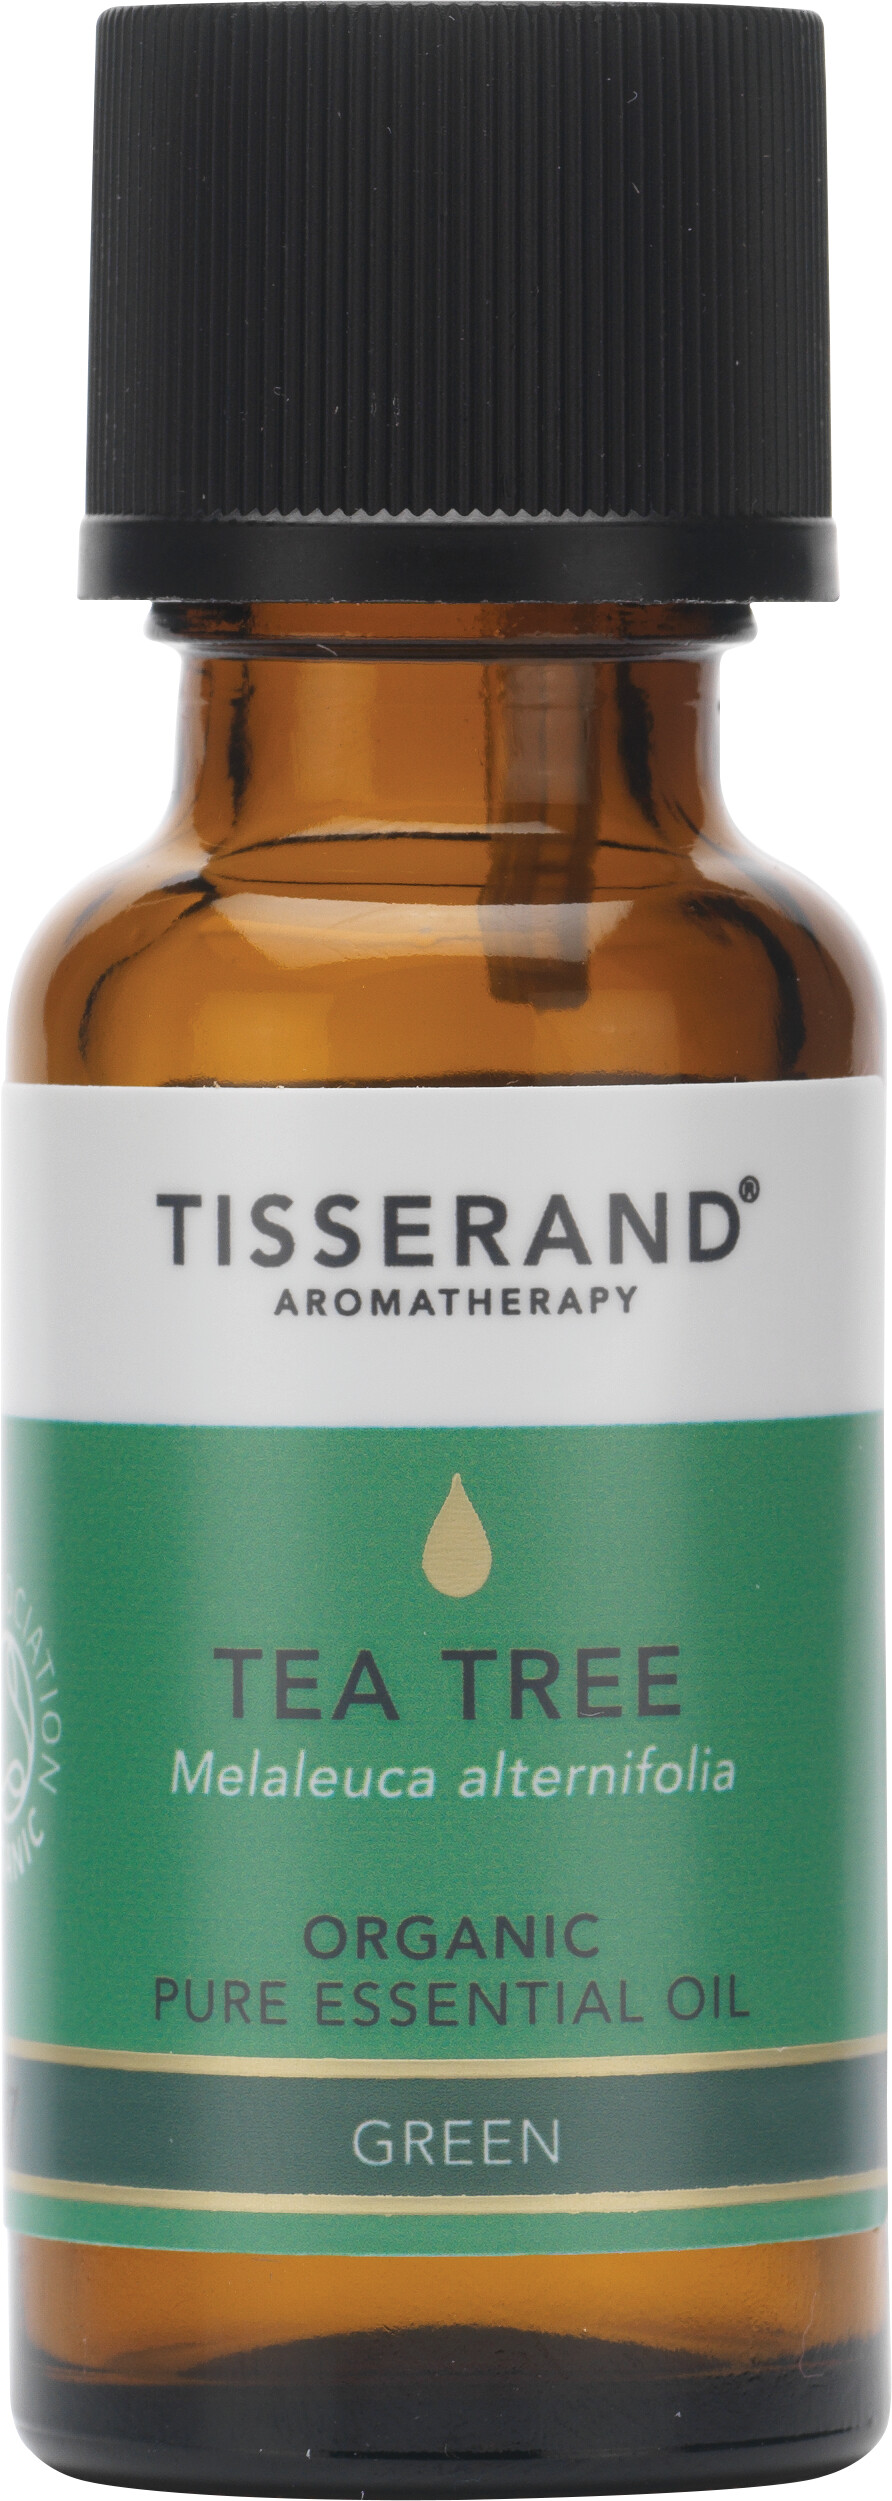 Tisserand Aromatherapy Tea Tree Organic Pure Essential Oil 20ml